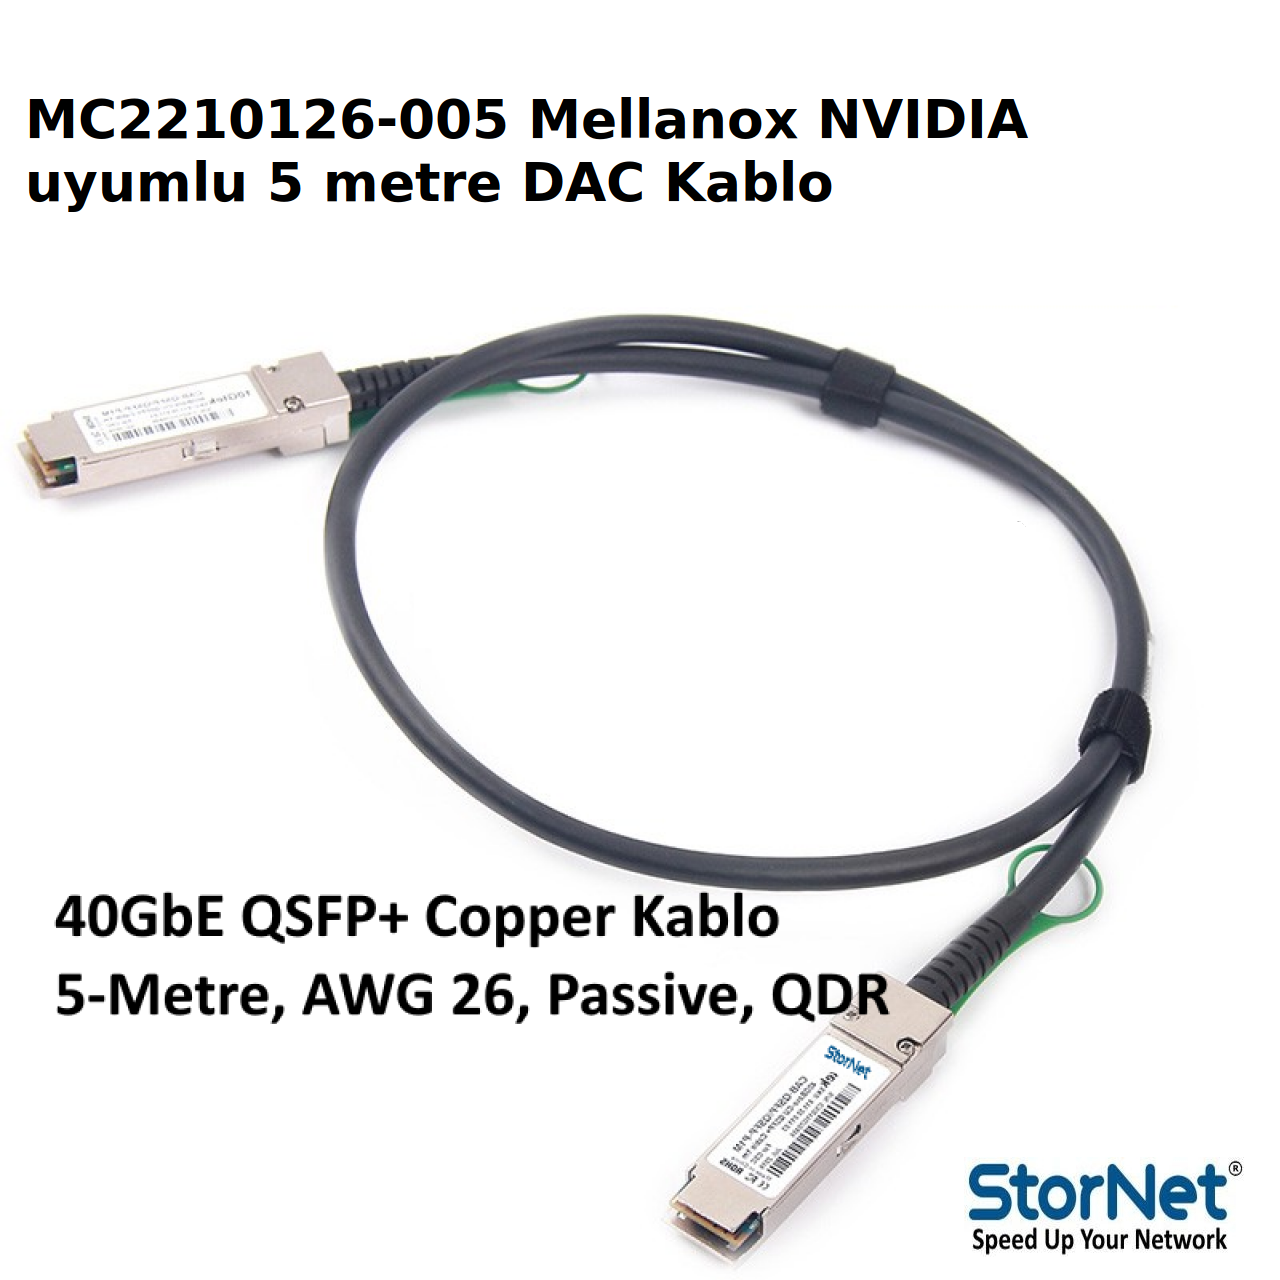 NVIDIA MC2210126-005 DAC Cable Ethernet 40GbE QSFP 